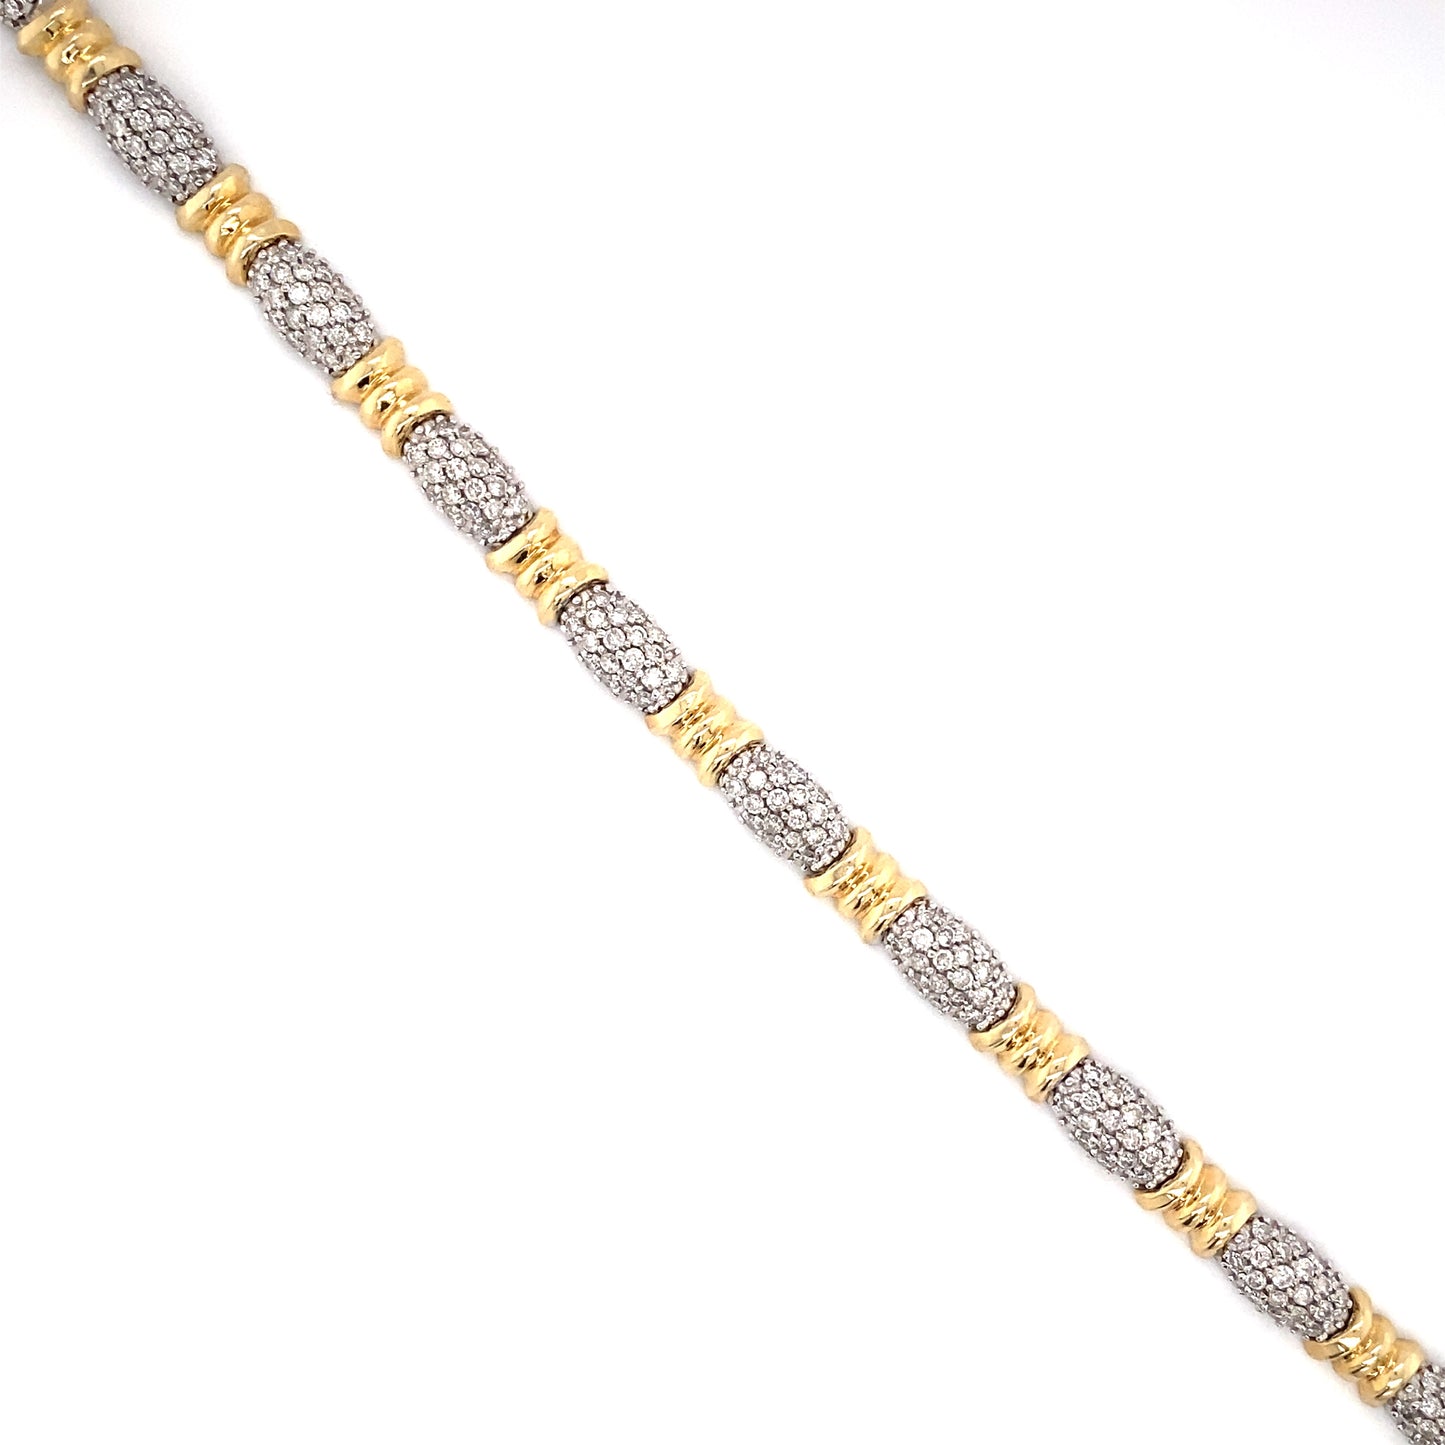 Circa 1990s 4.9 Carat Diamond Link Bracelet in Two Tone 14K Gold